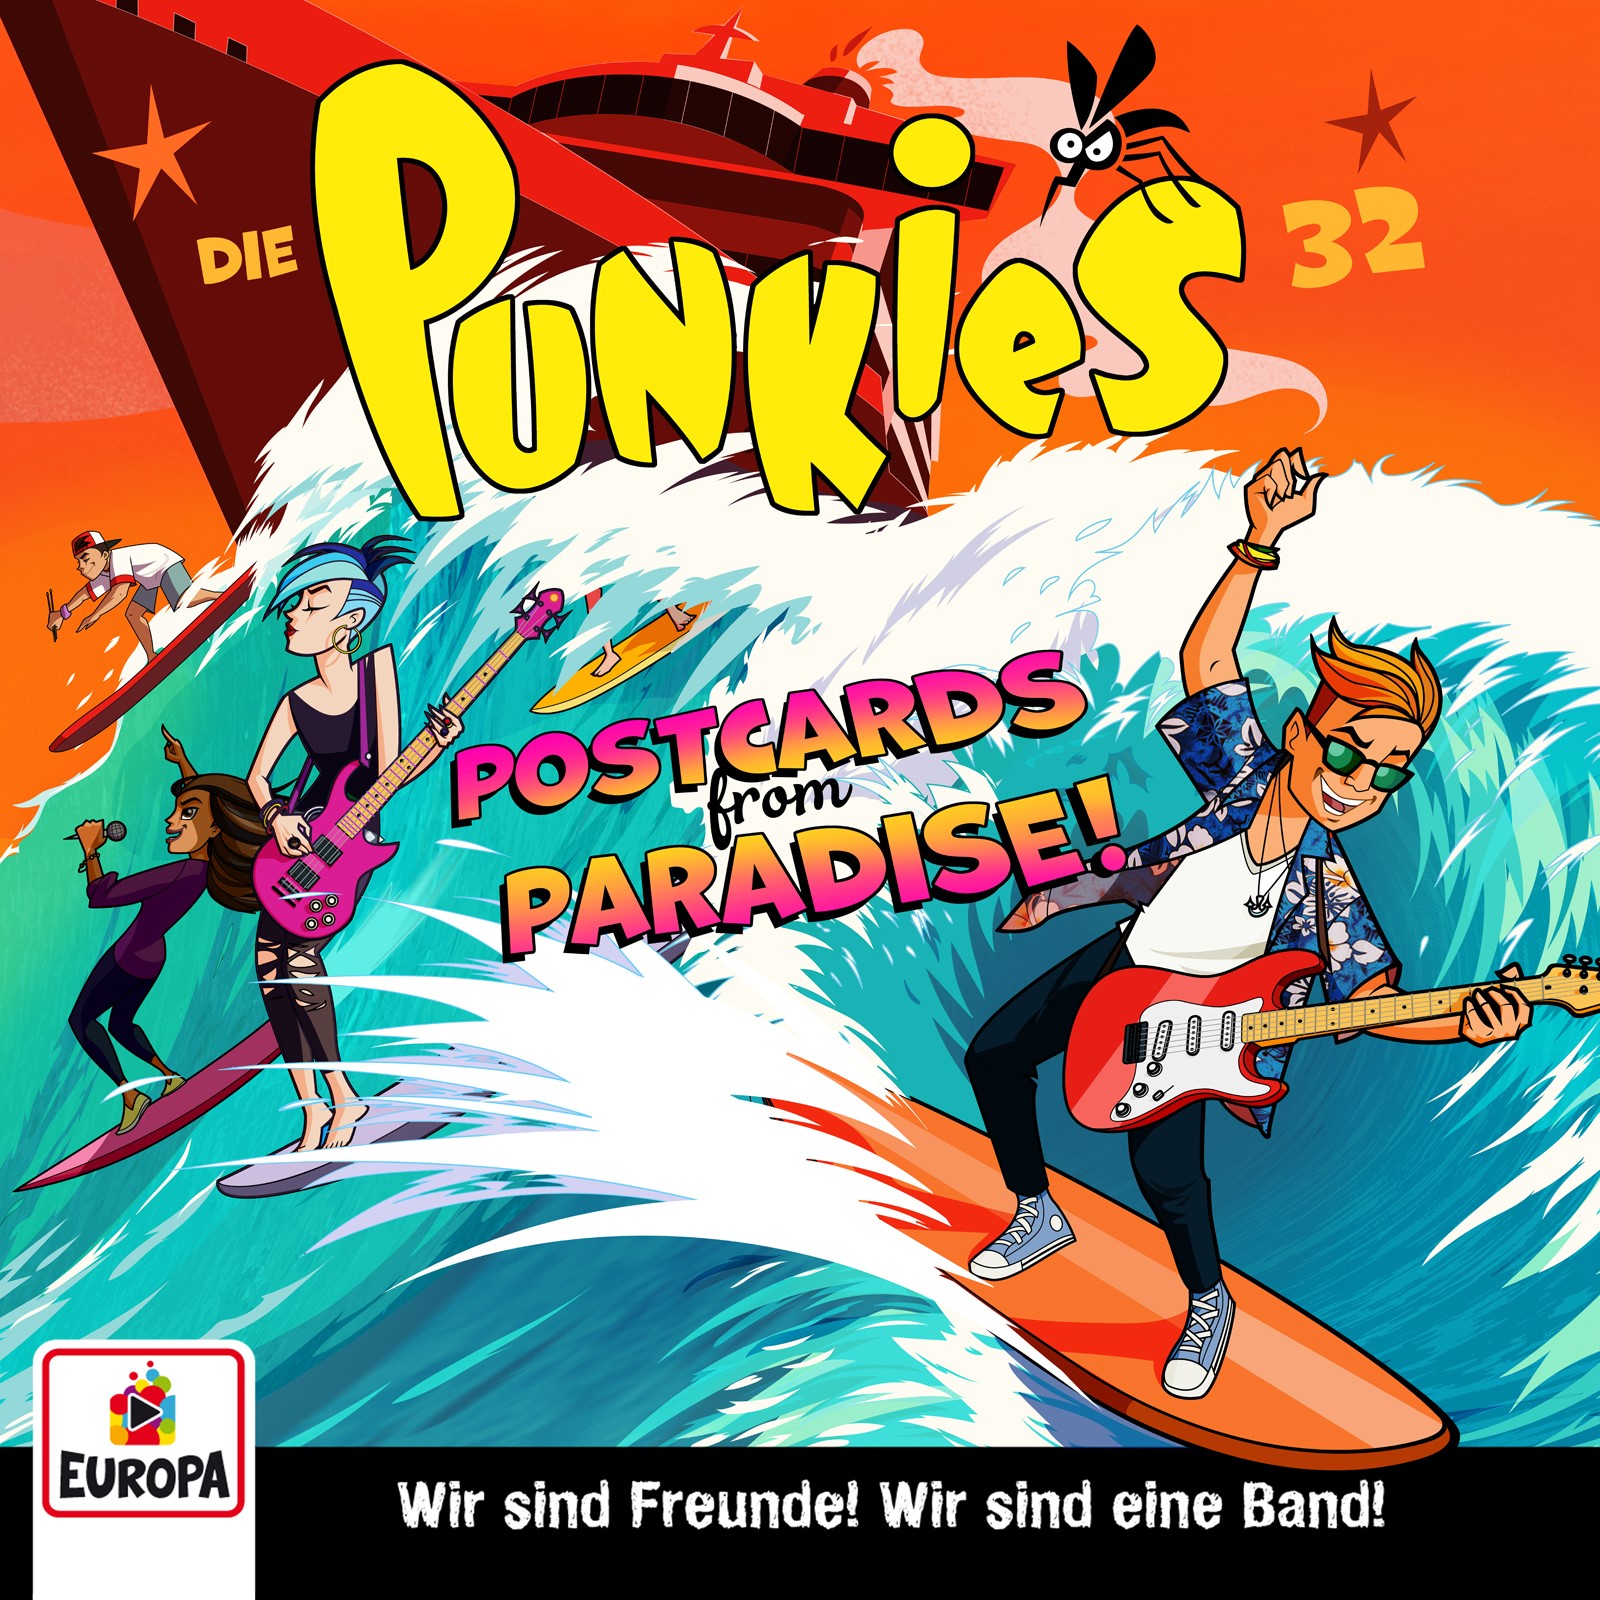 Die Punkies - Postcards from Paradise